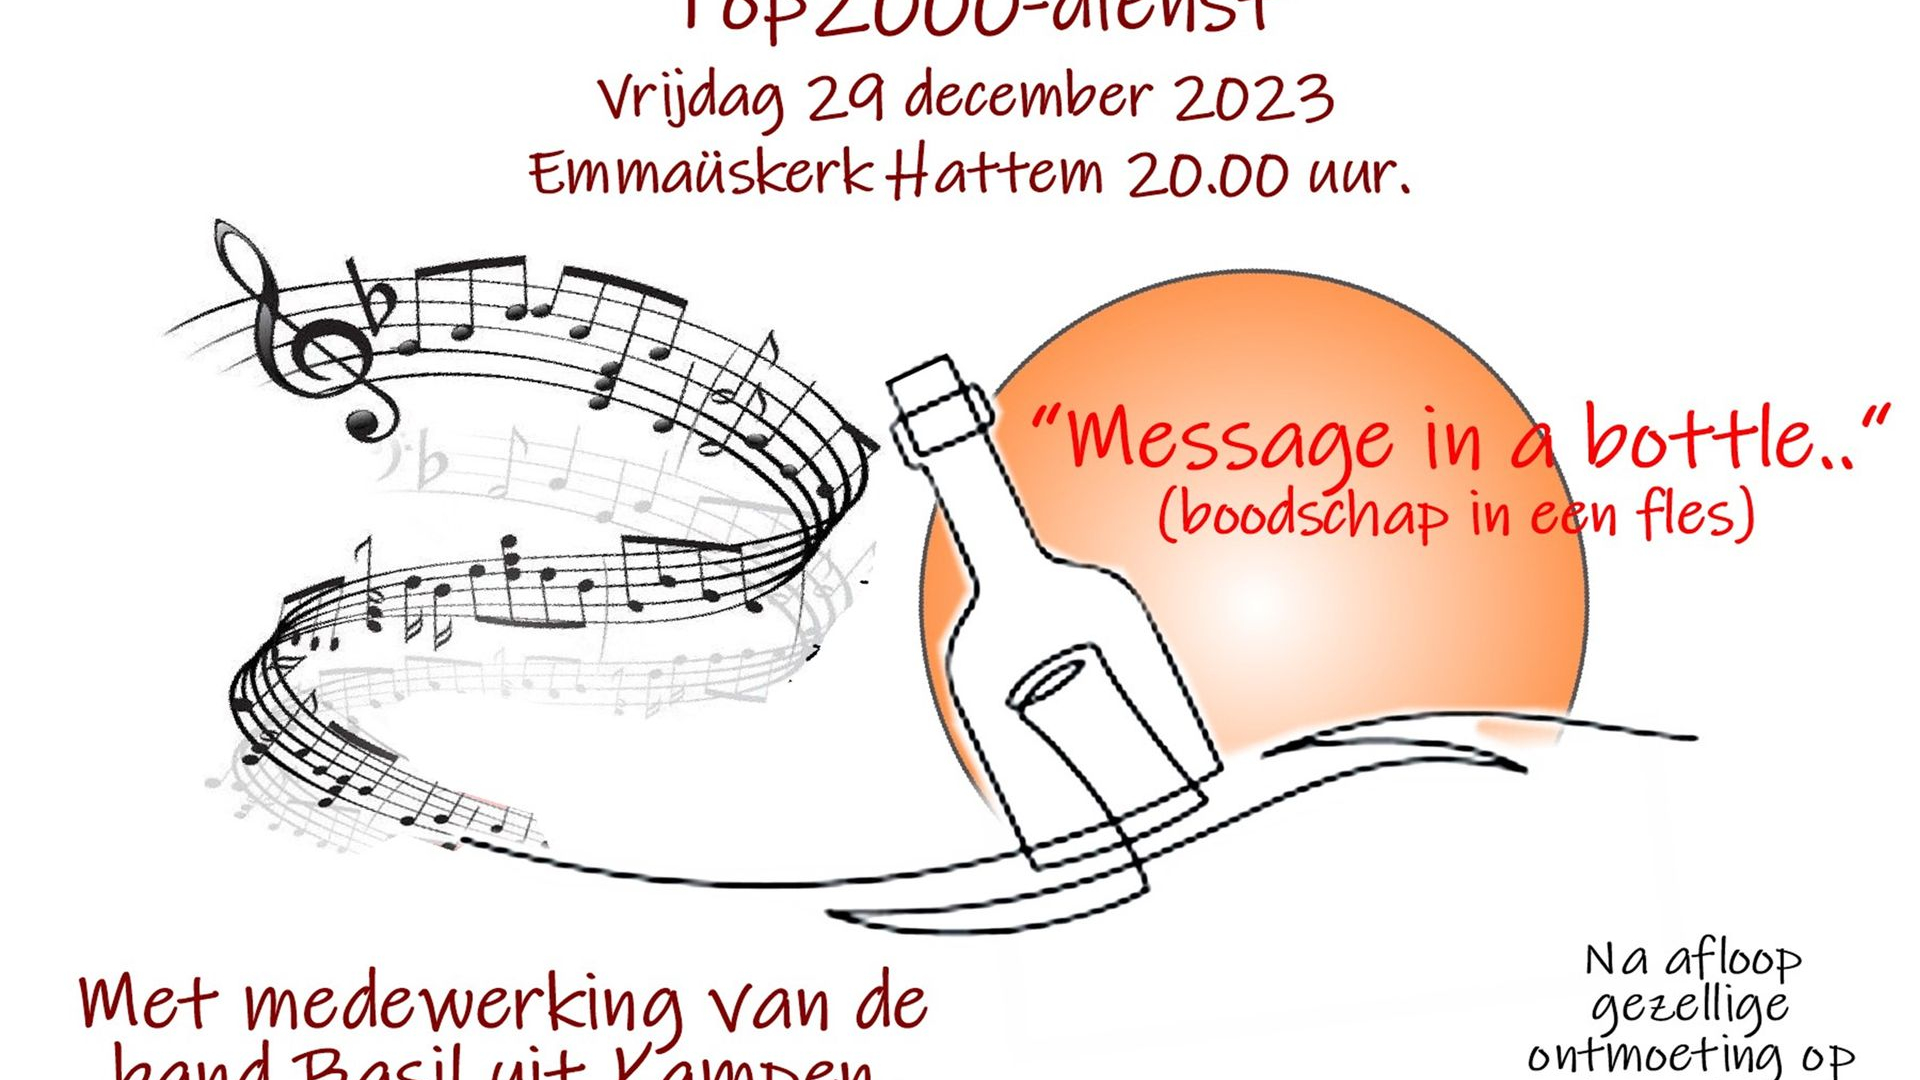 Top 2000 dienst in Hattem over ‘Message in a bottle’